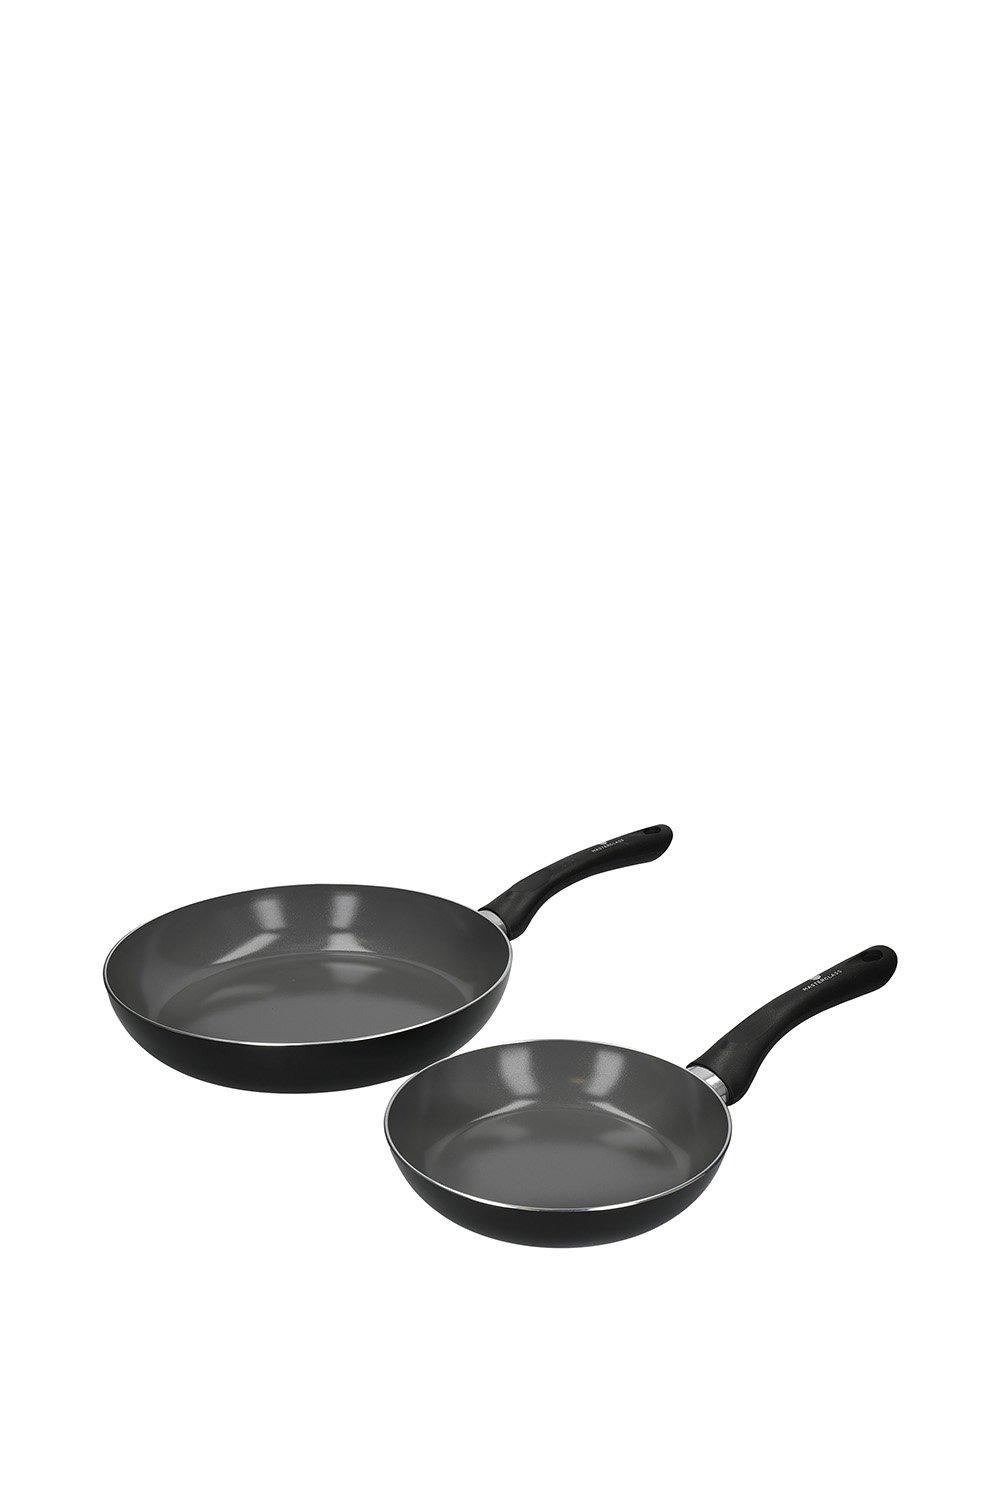 Can-to-Pan Ceramic Non-Stick Pan Set with 2 Recycled Aluminium Frying Pans